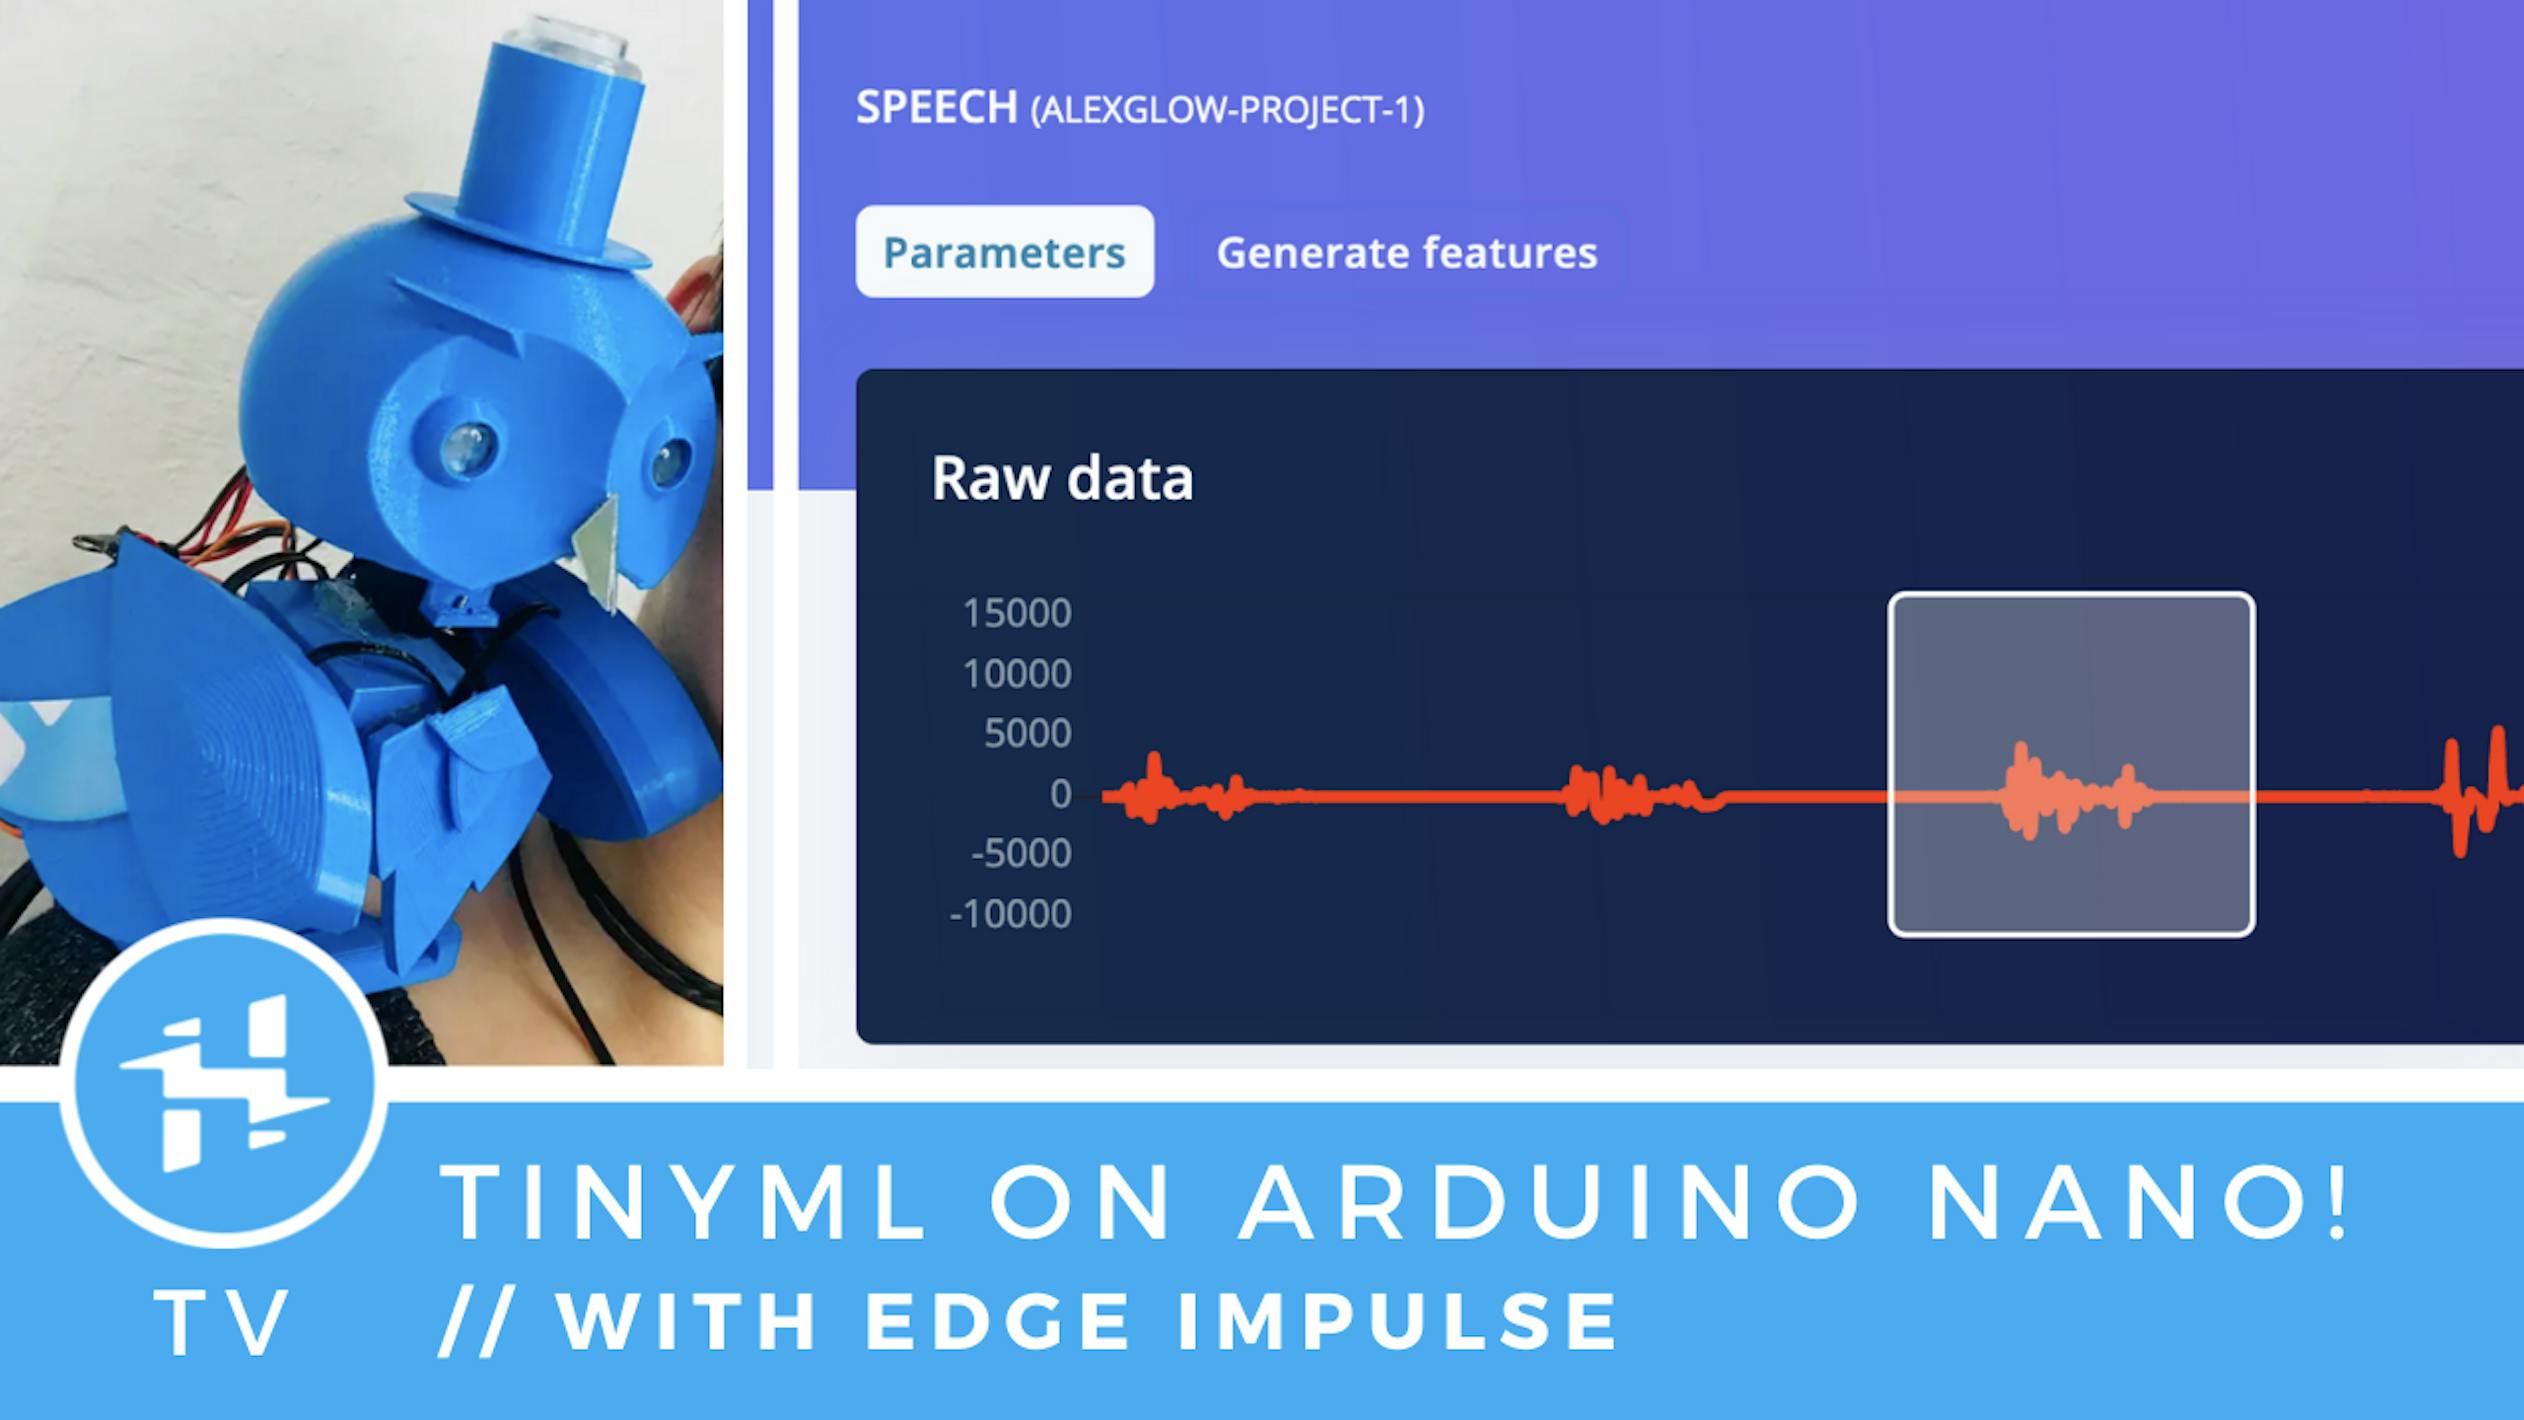 Arduino Nano 33 BLE Sense - Edge Impulse Documentation